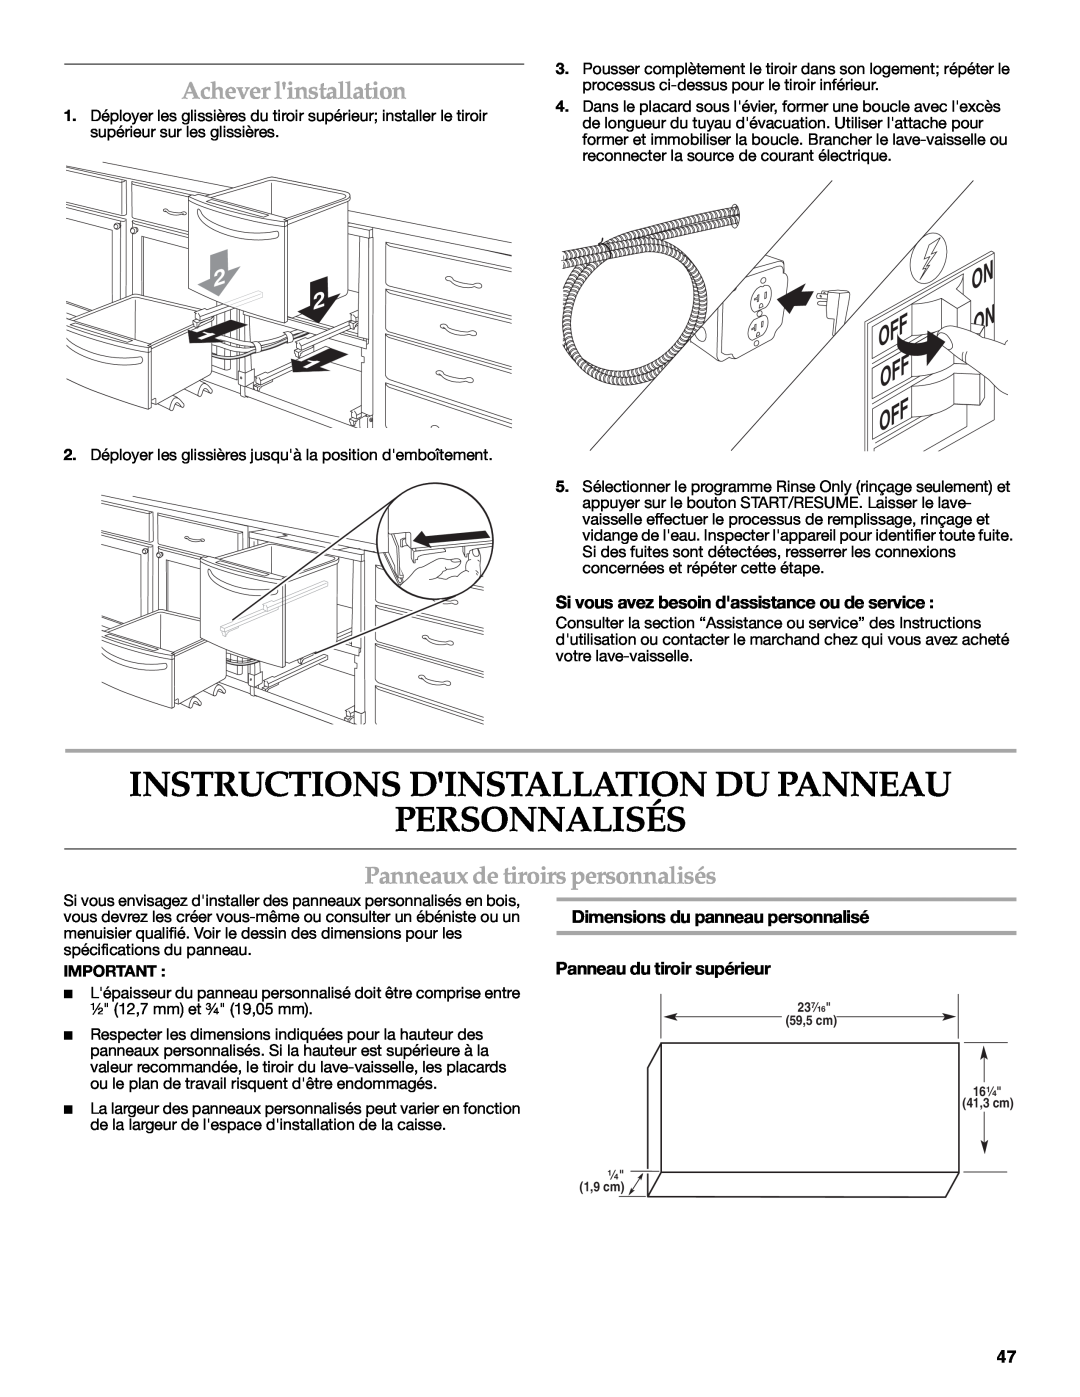 KitchenAid W10216167A Instructions Dinstallation Du Panneau Personnalisés, Achever linstallation, 2 2 